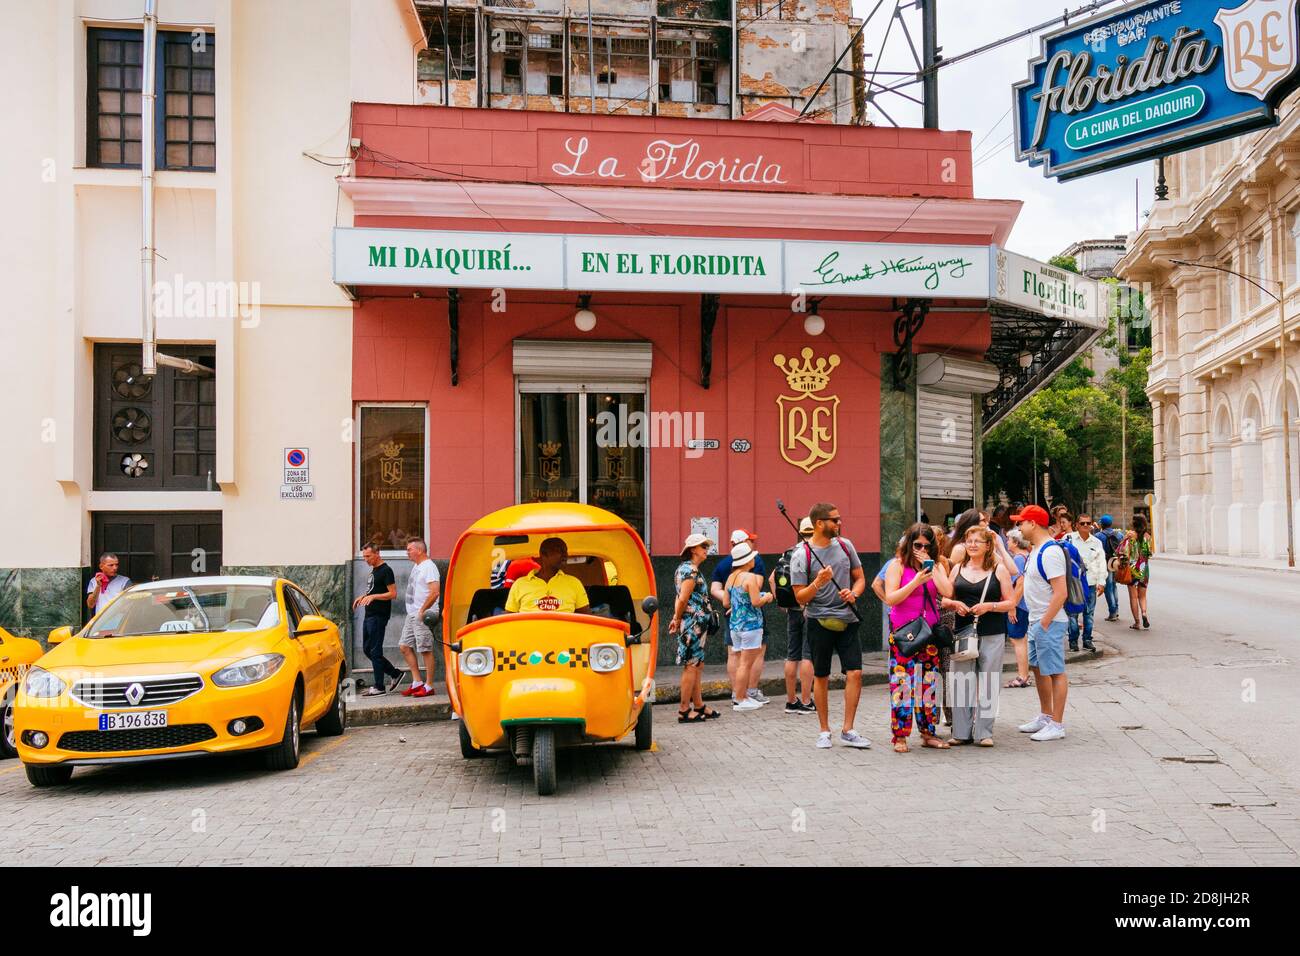 Coco-taxi next to El Floridita, venue for Daiquiri cocktail and Hemingway's favorite bar. La Habana - La Havana, Cuba, Latin America and the Caribbean Stock Photo